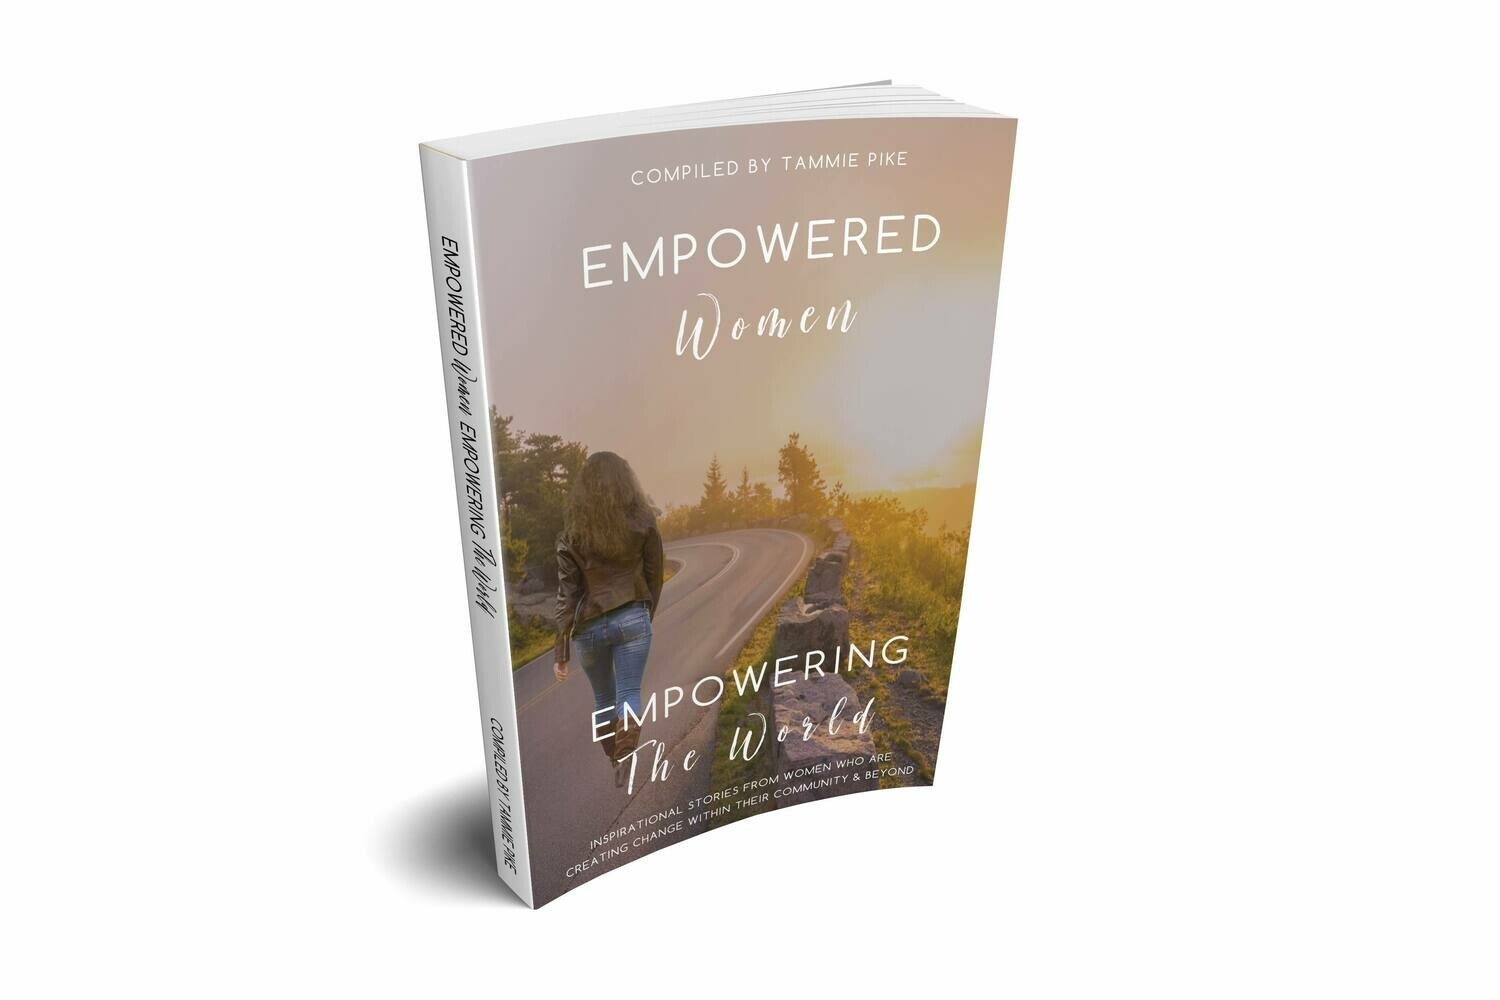 Empowered Women Empowering The World
Paperback